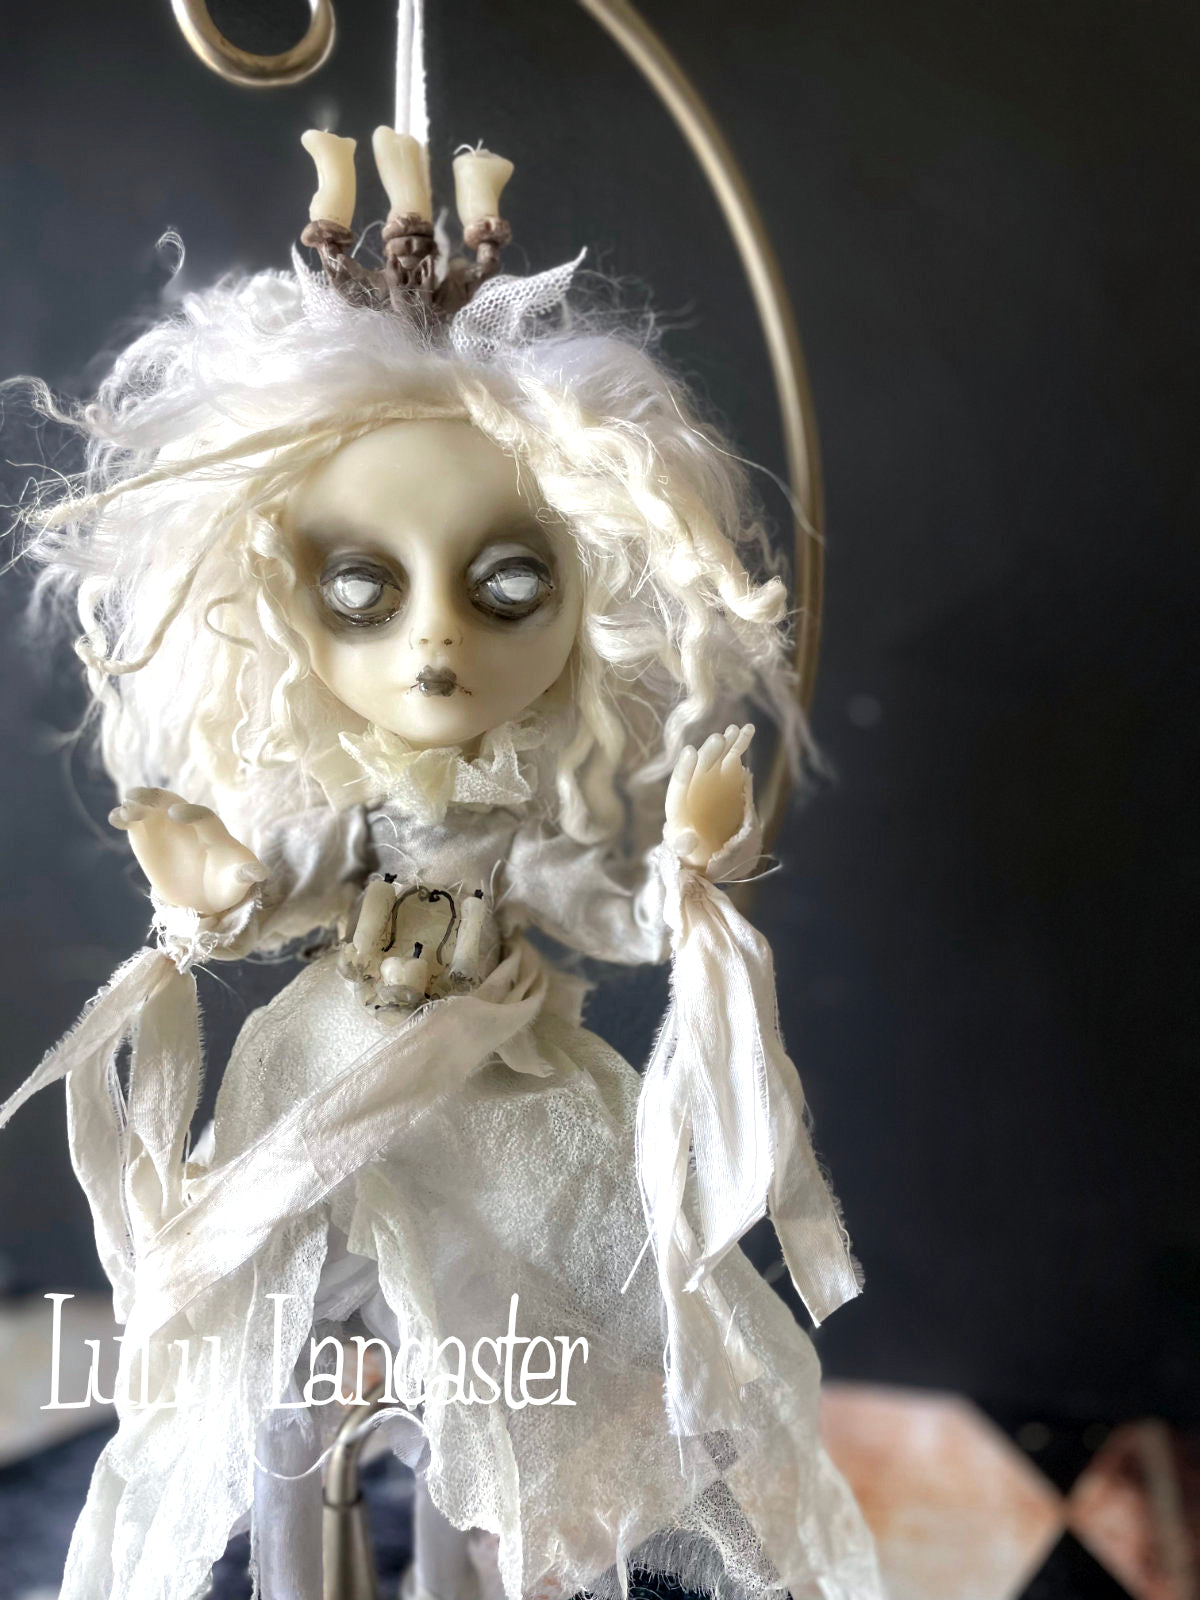 Harper the Poltergeist Original LuLu Lancaster Art Doll